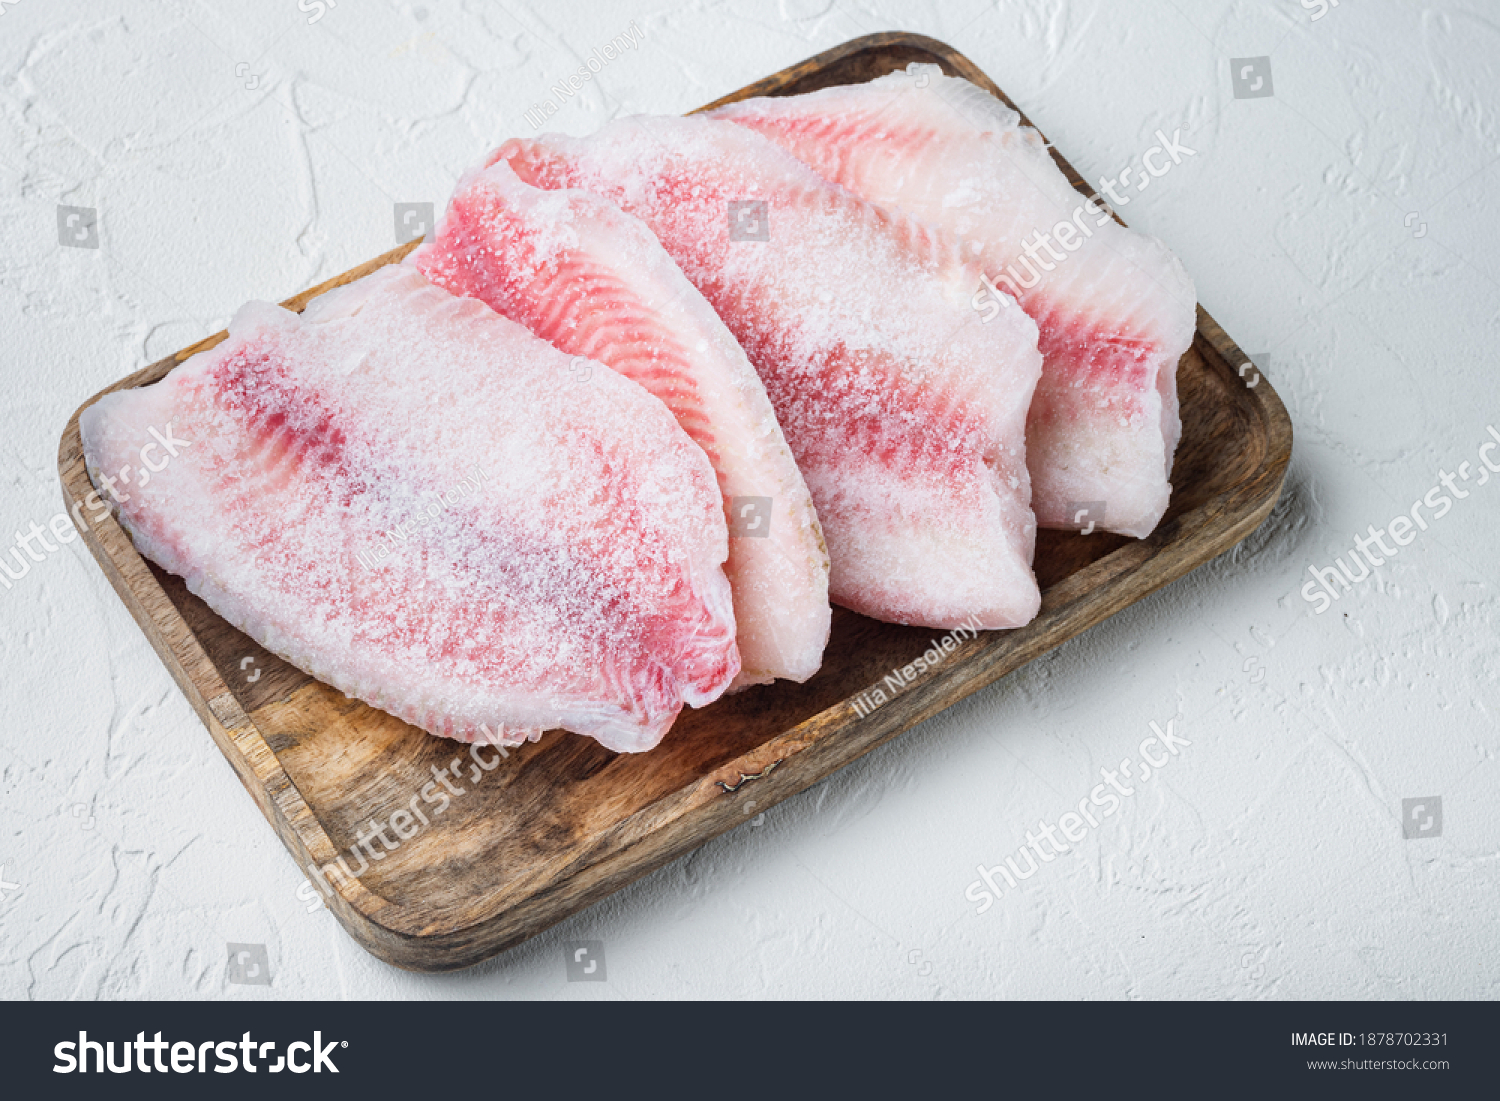 Frozen fish fillet, on white background #1878702331